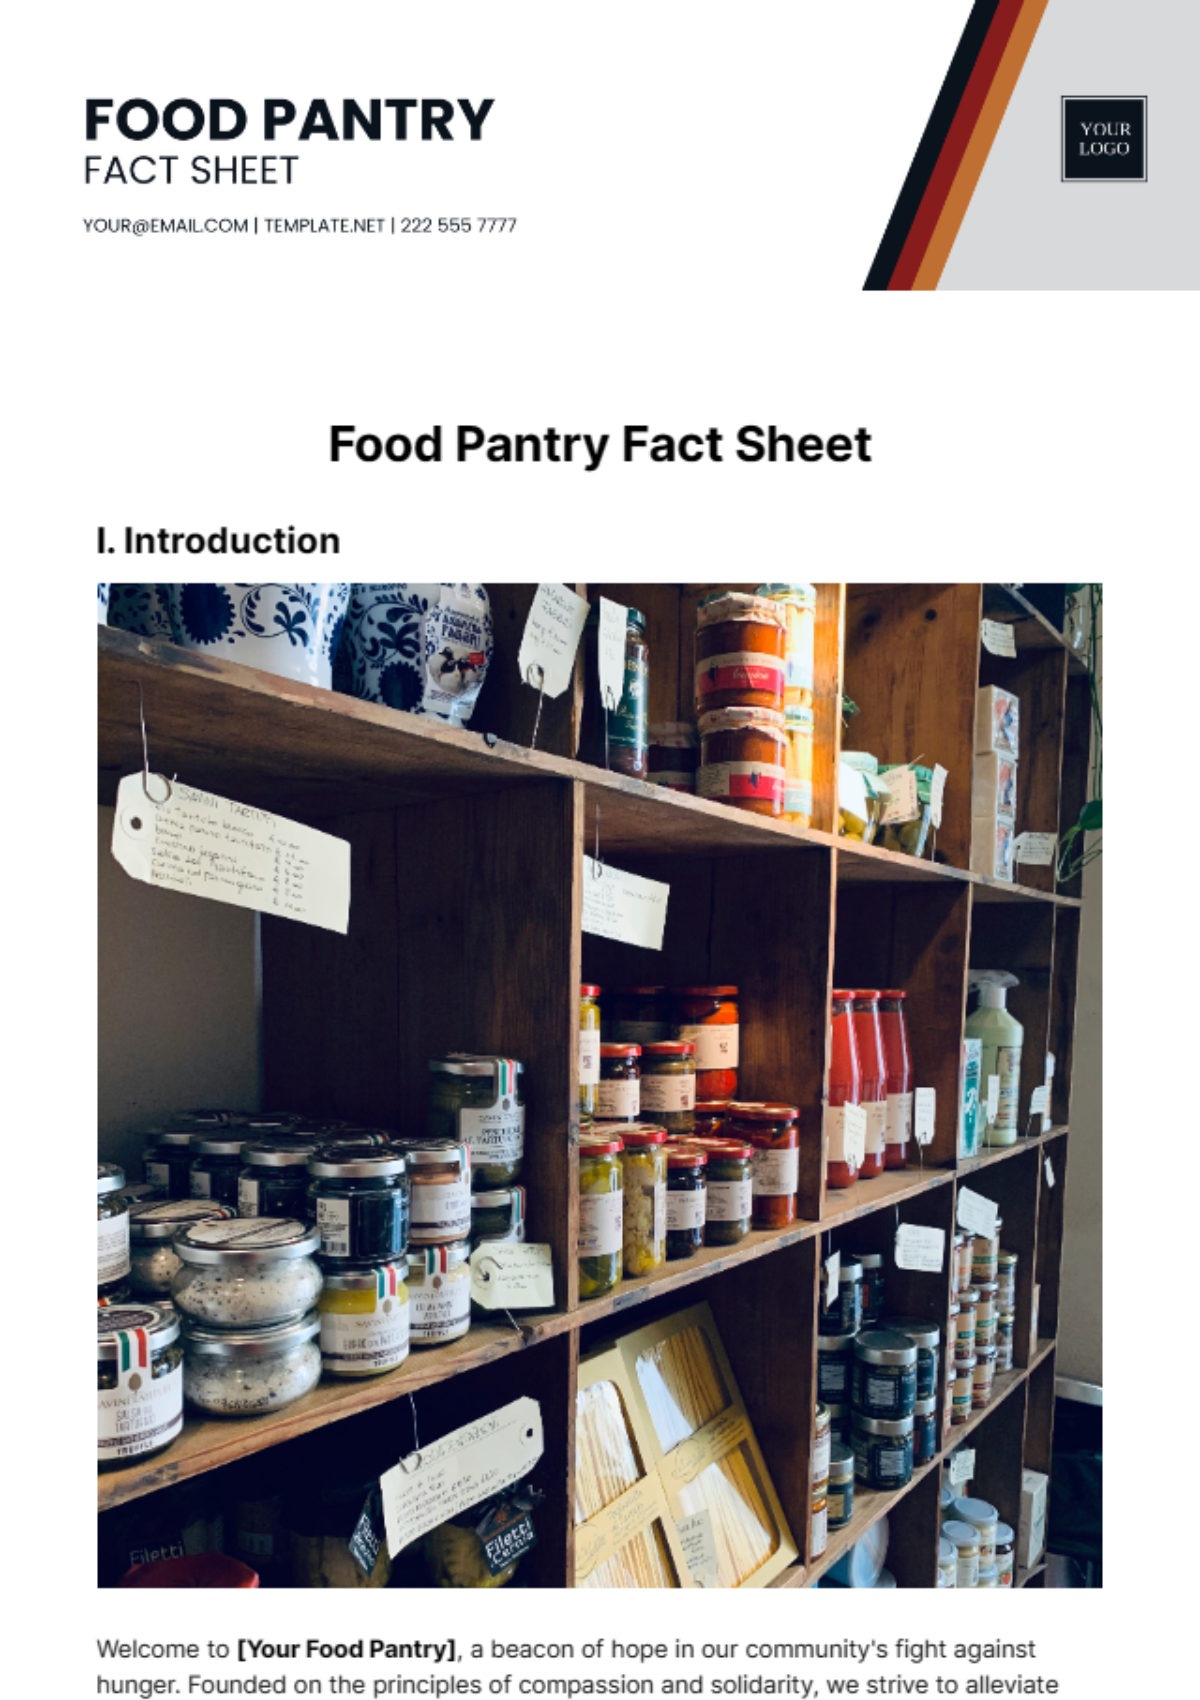 Food Pantry Fact Sheet Template